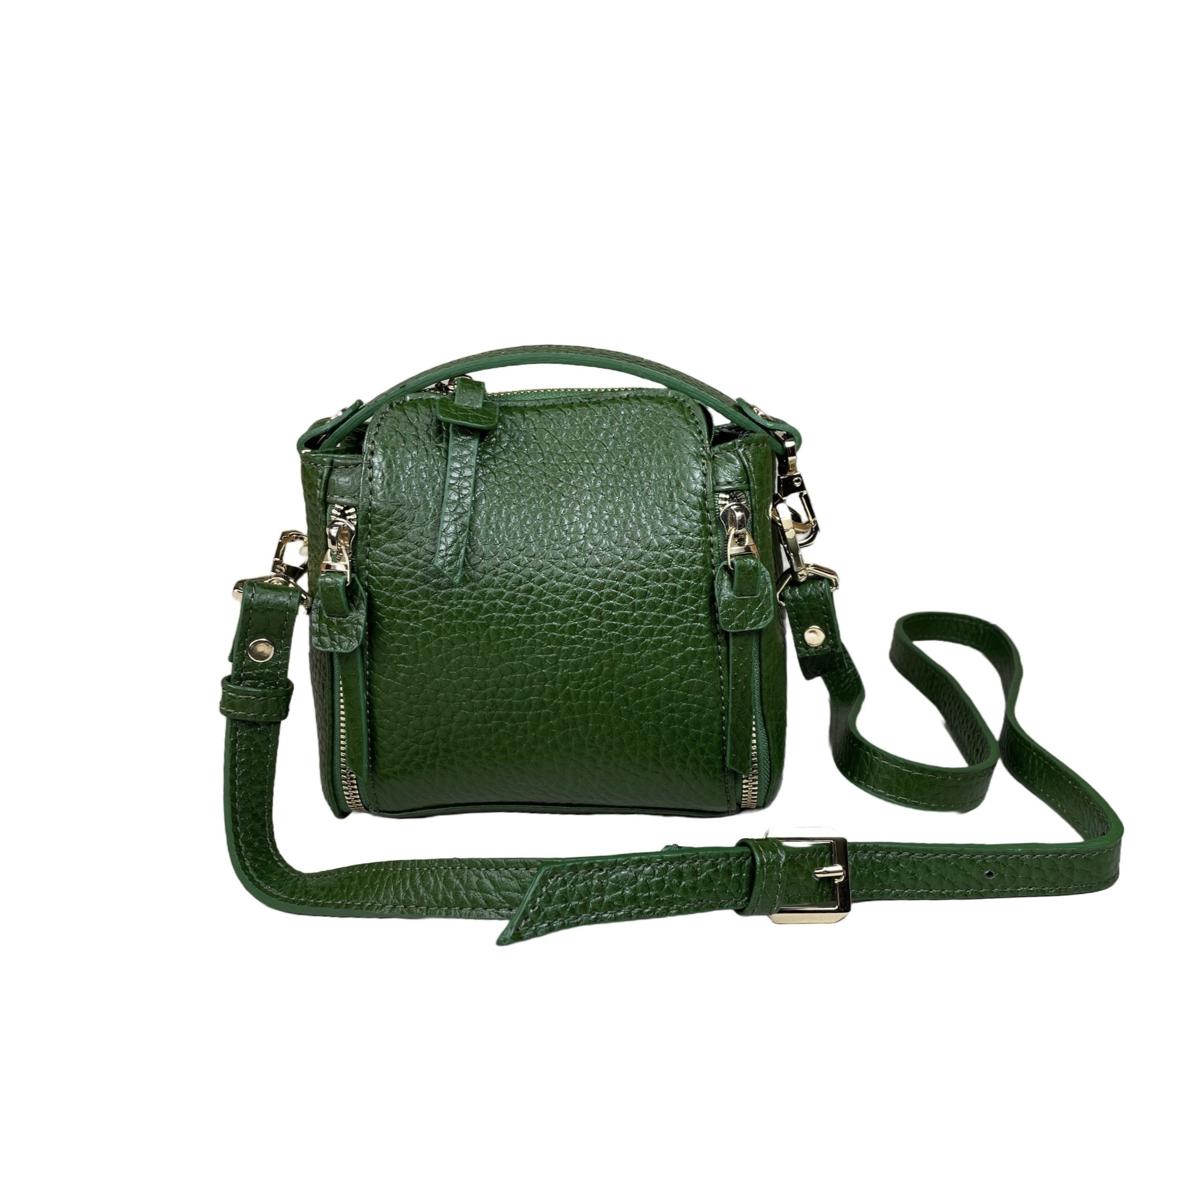 LeatherLuxe - Green Leather Handbag Shoulder Bag for Women Genuine leather Designer Premium leather bag for women leather hobo tote messenger bag Leather Accessories Leather Shop Leather Goods